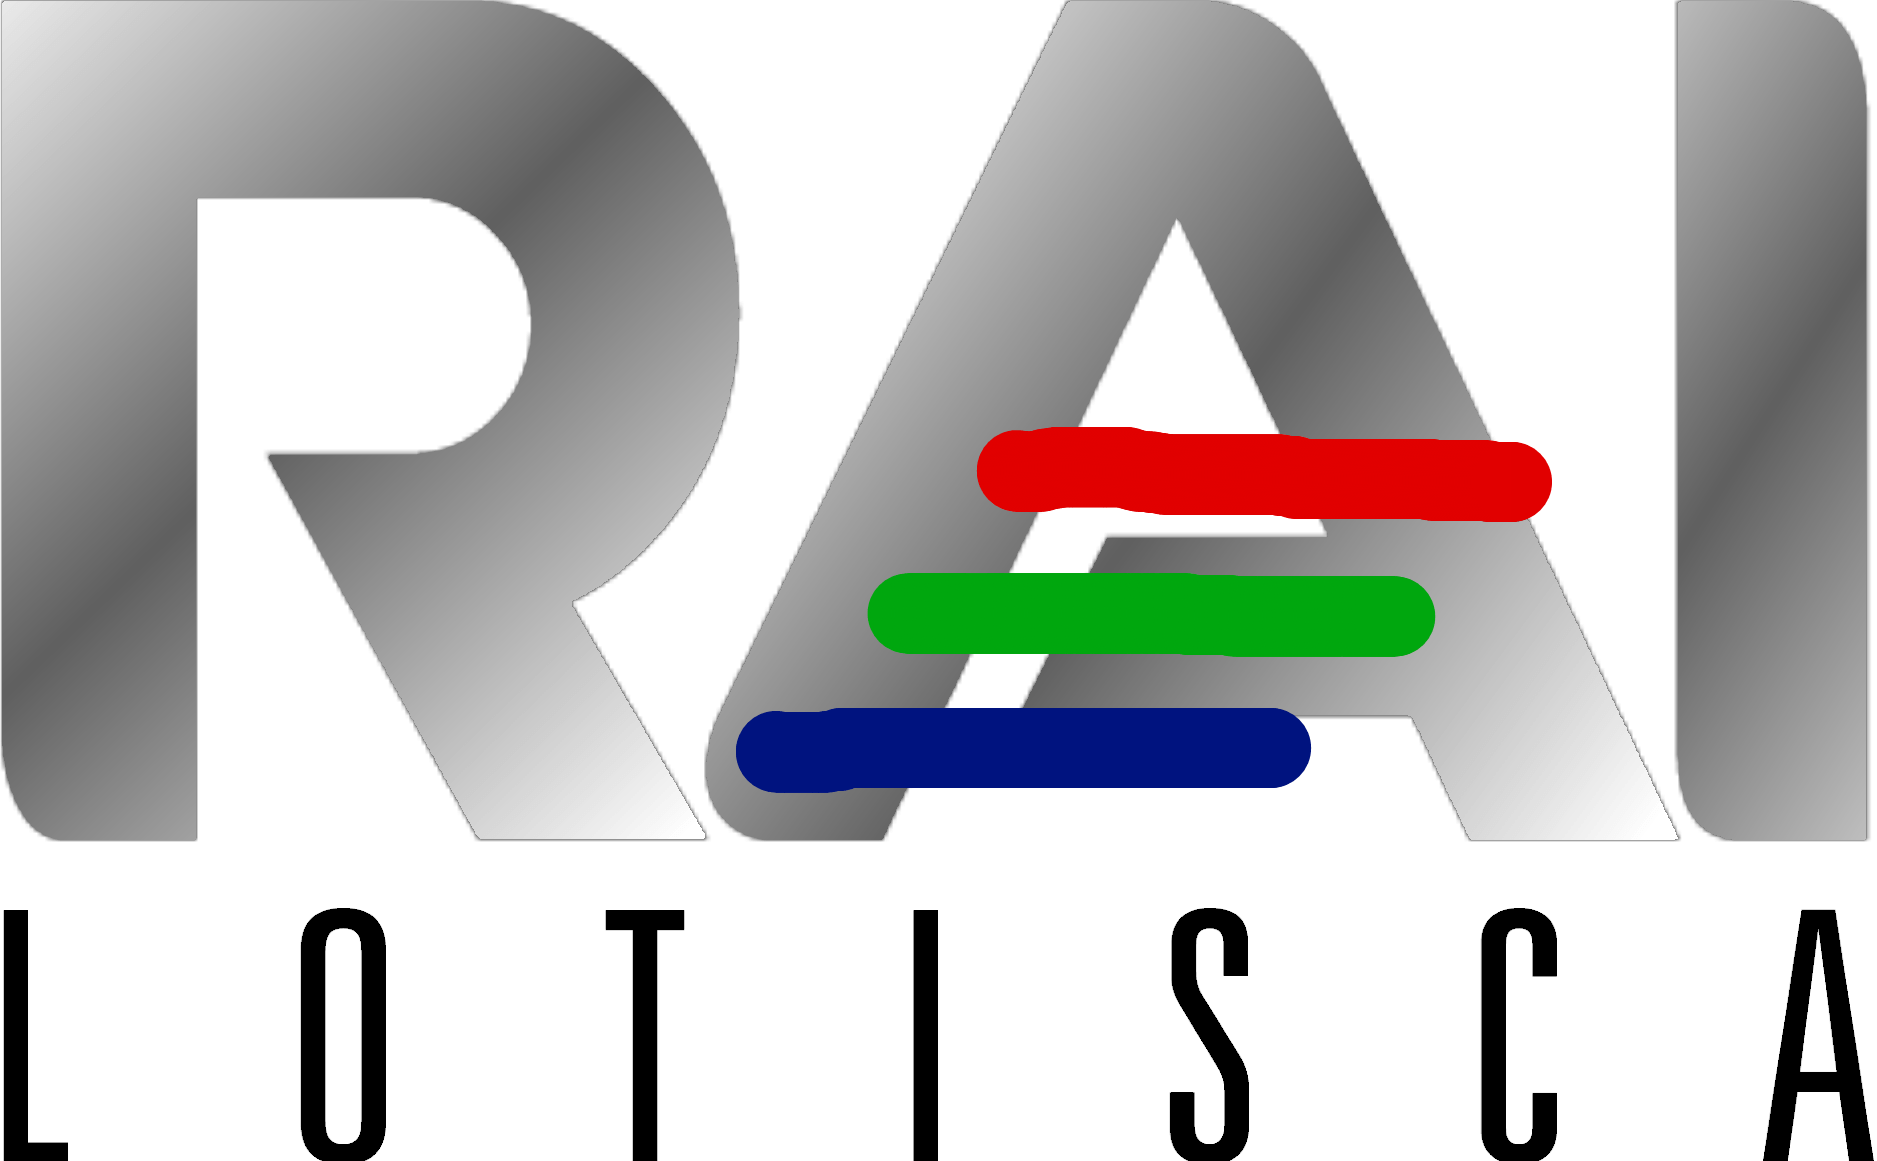 Rai Logo - Rai Lotisca Logos